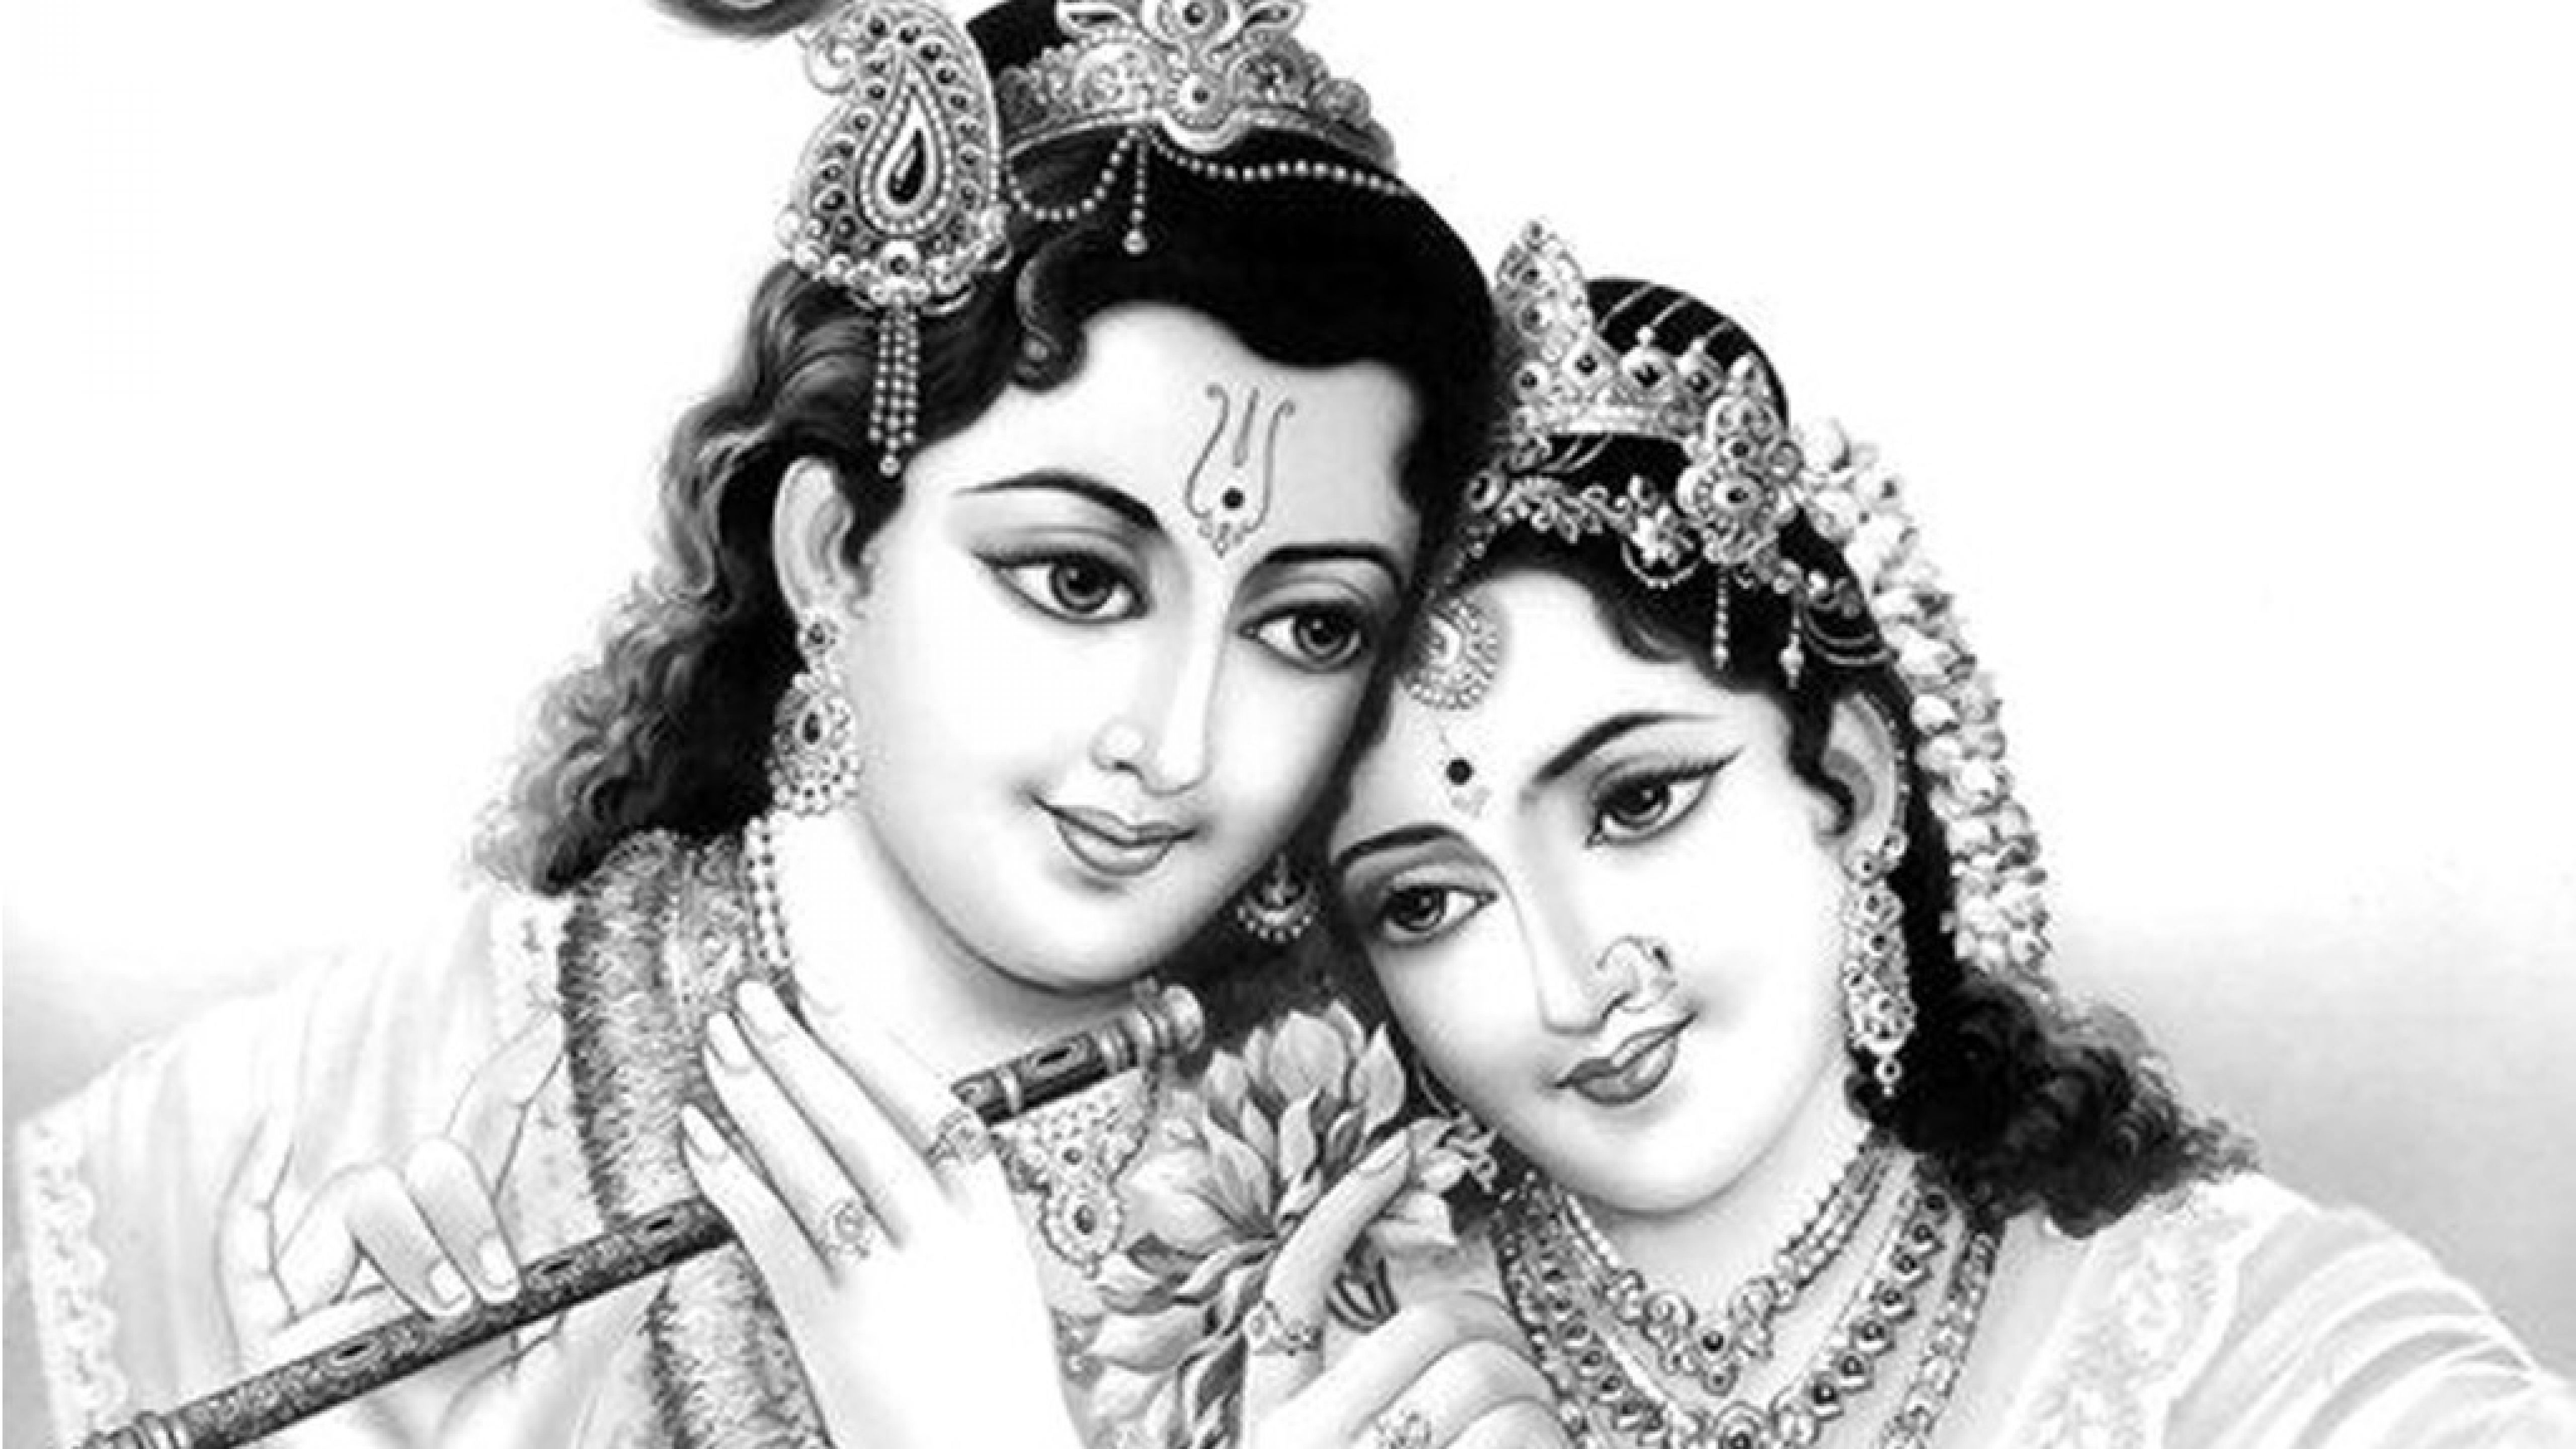 Radha Krishna 8K Drawning Wallpaper Download Free. Radha krishna wallpaper, Krishna wallpaper, Radha krishna picture